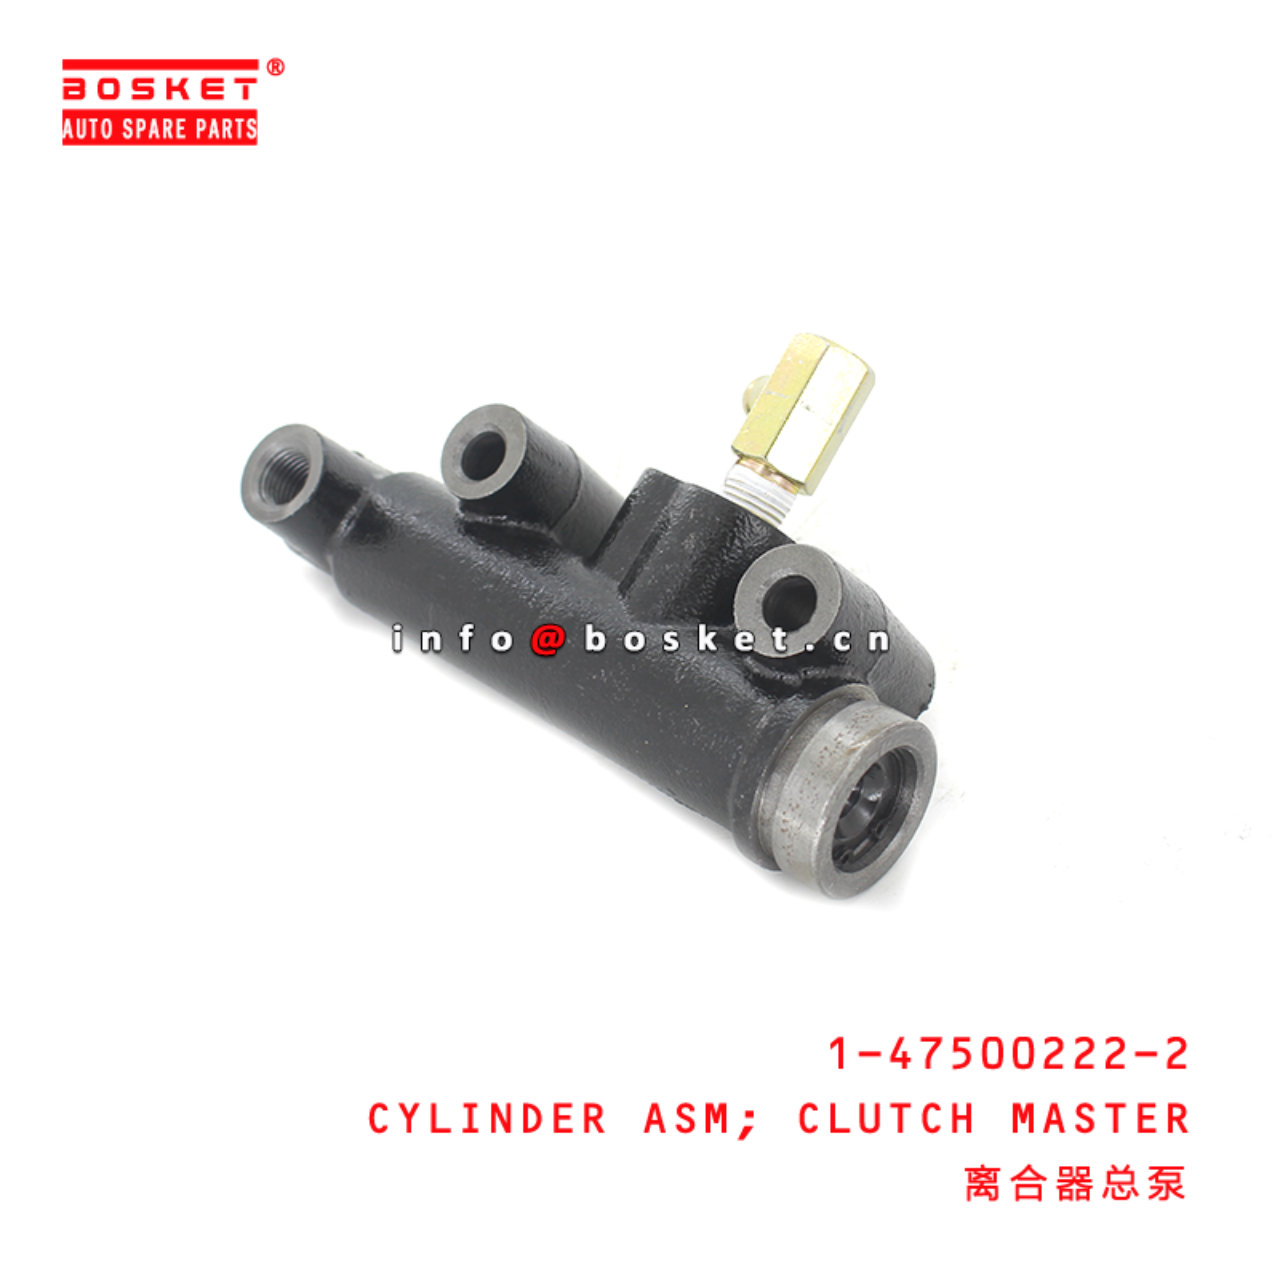 1-47500222-2 Clutch Master Cylinder Assembly Suitable for ISUZU FSR33  1475002222